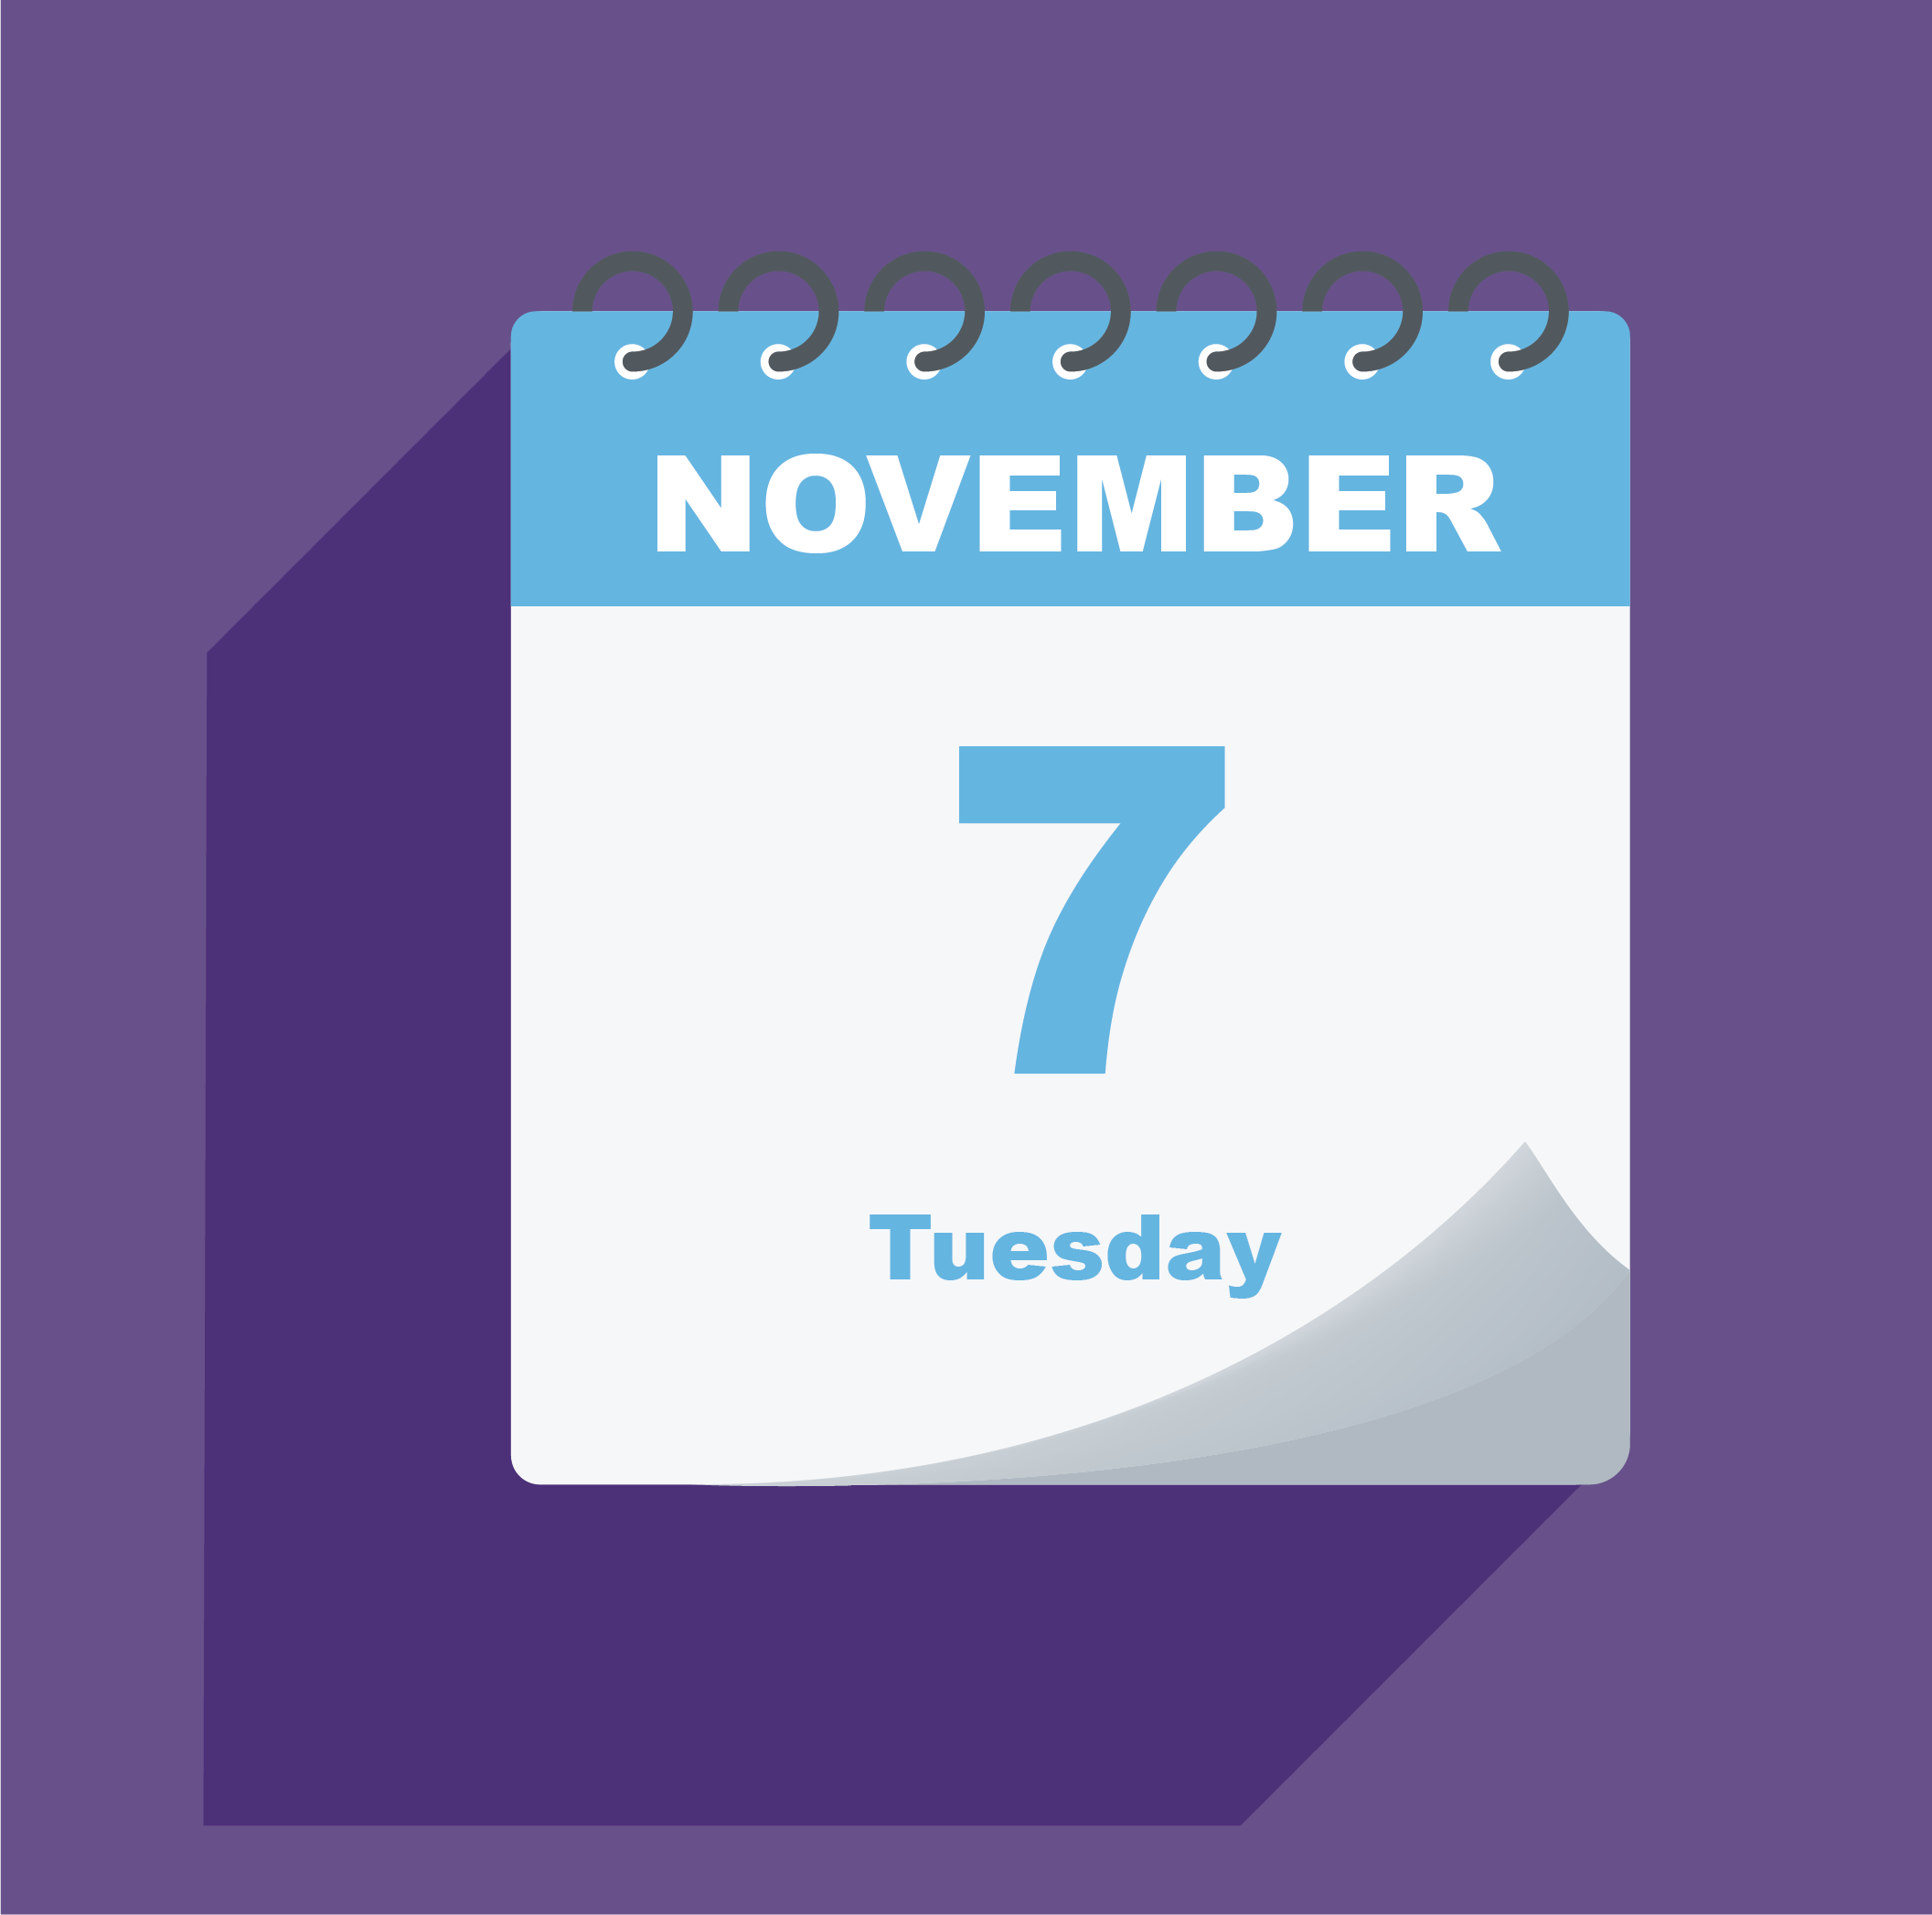 November 7th election day -  Voting Deadline Calendar Page